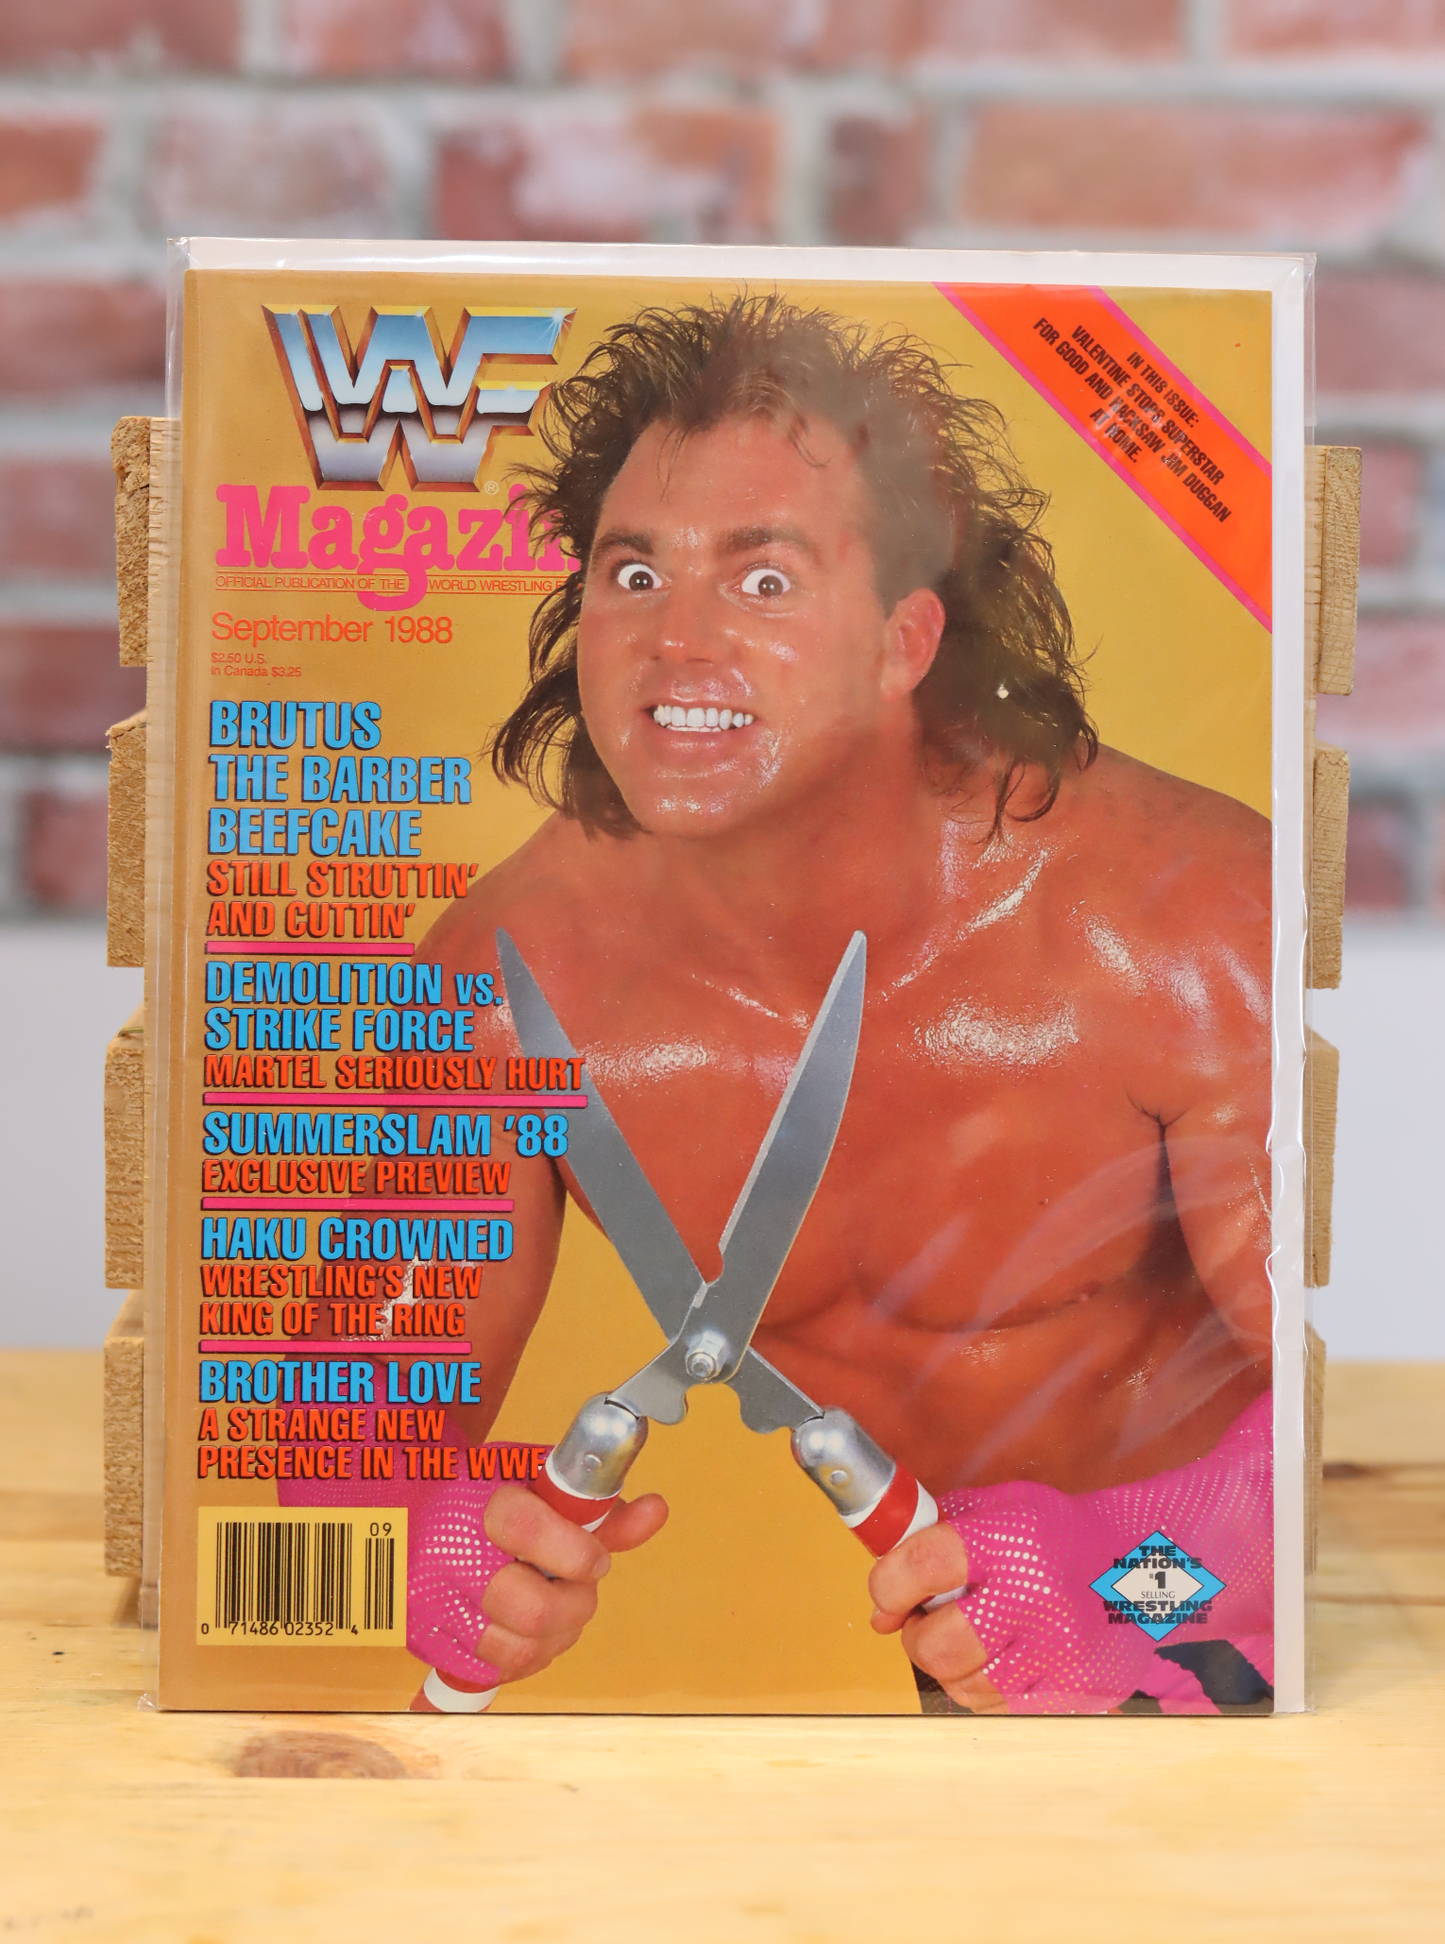 Original WWF WWE Vintage Wrestling Magazine Brutus Beefcake (September 1988)